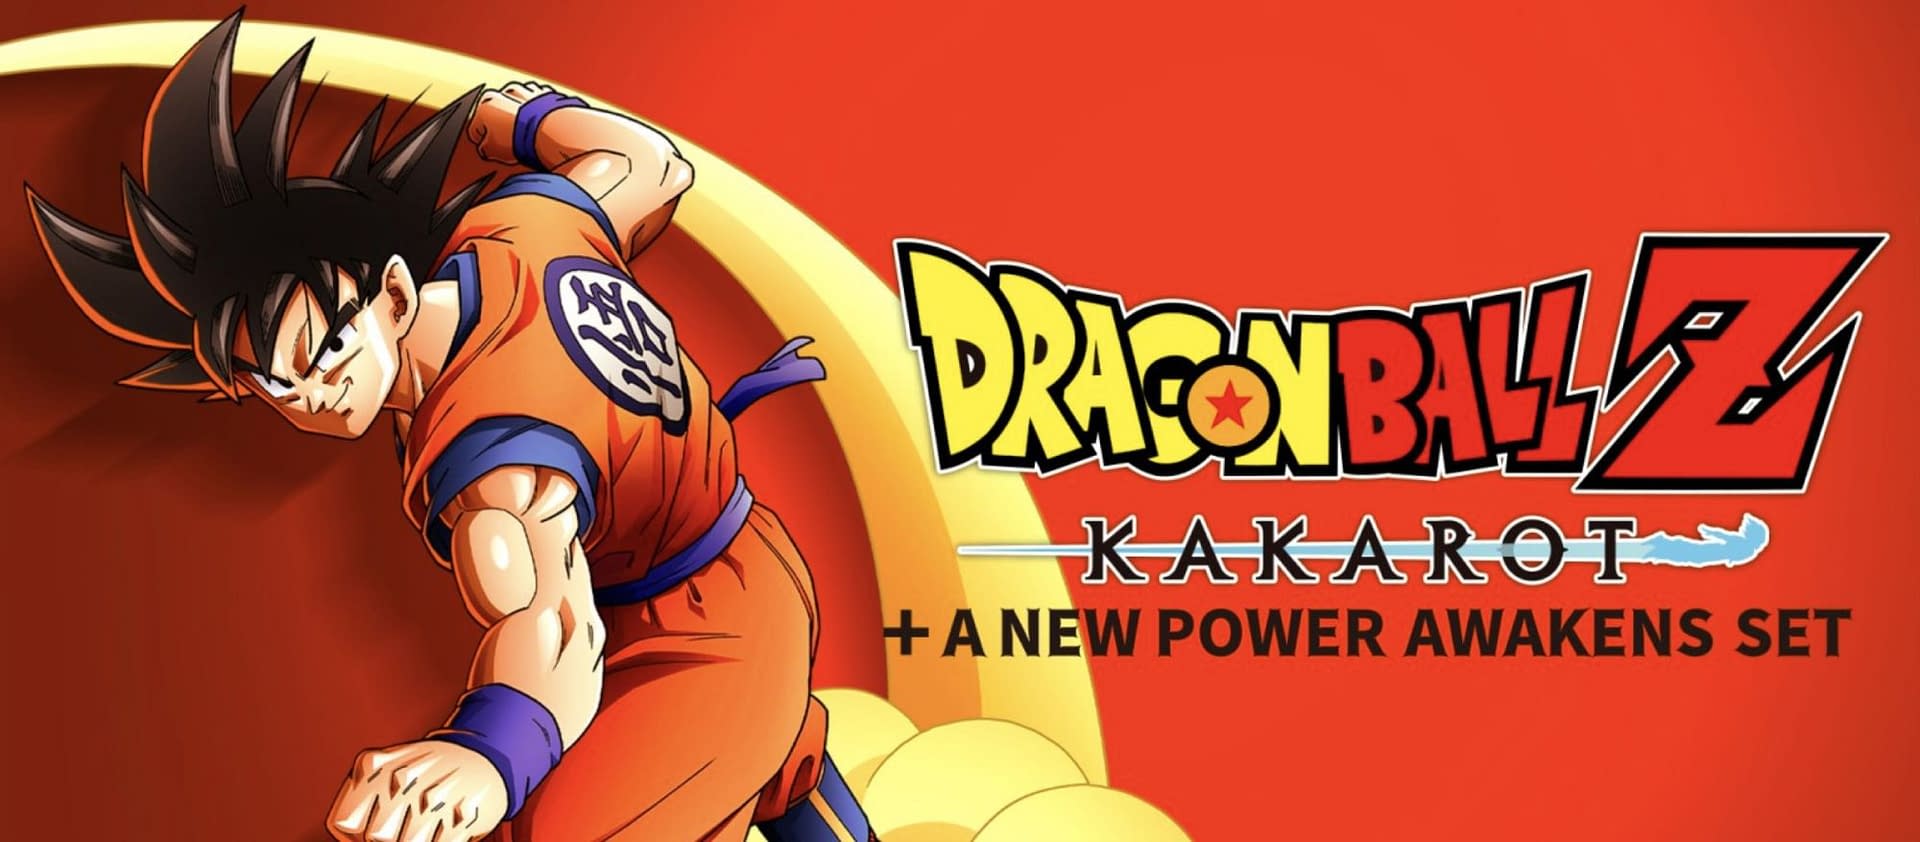 All Possible Beam Struggles - Dragon Ball Z Kakarot Mods 